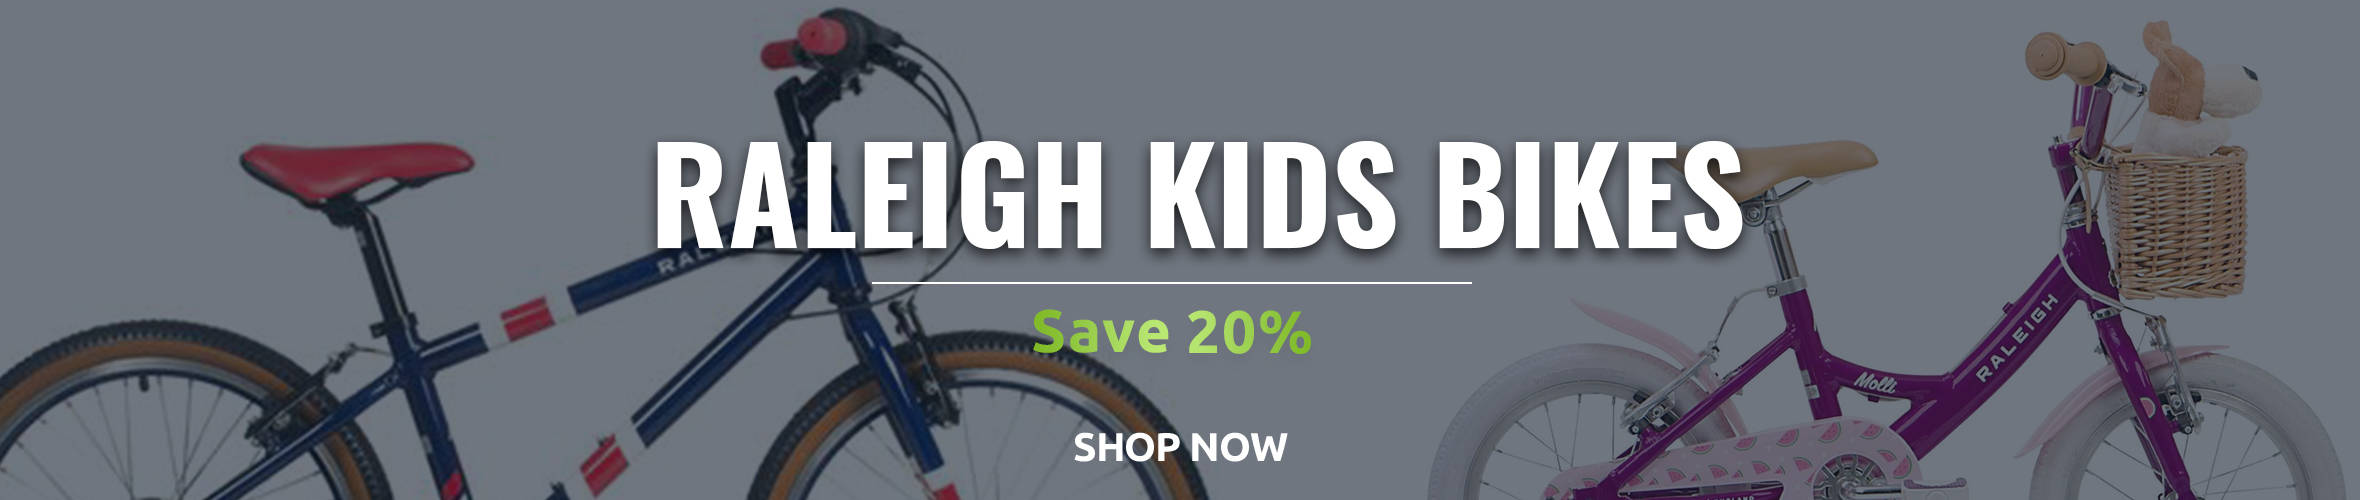 Raleigh Kids Bikes - Save 20